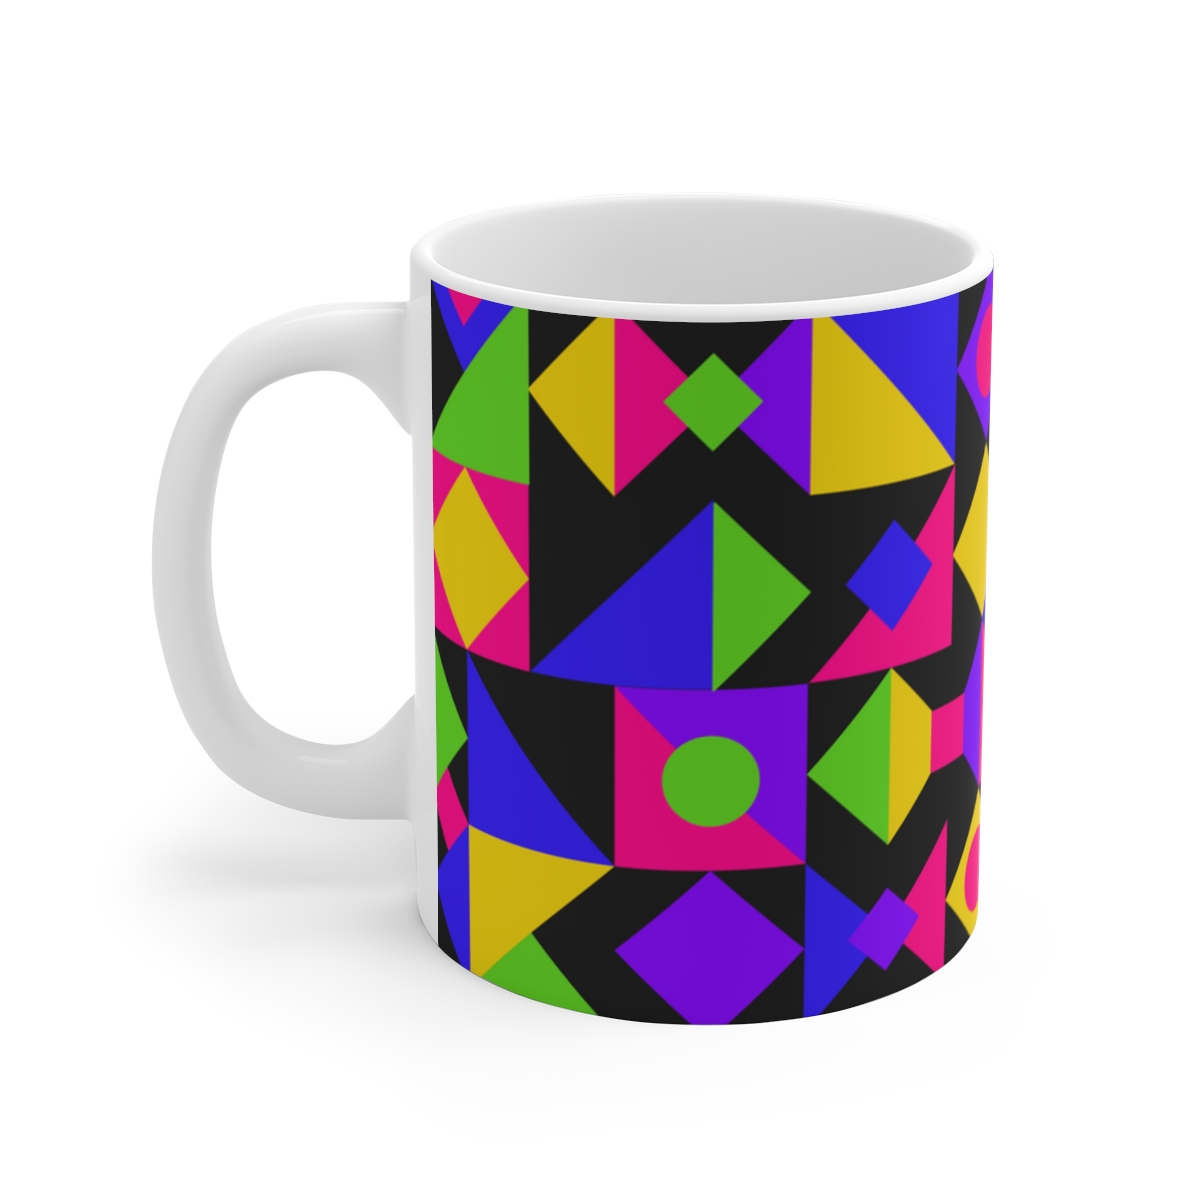 enjoy-your-favorite-drink-in-style-with-our-ceramic-mug-ceramic-mugs-11oz15o.jpg